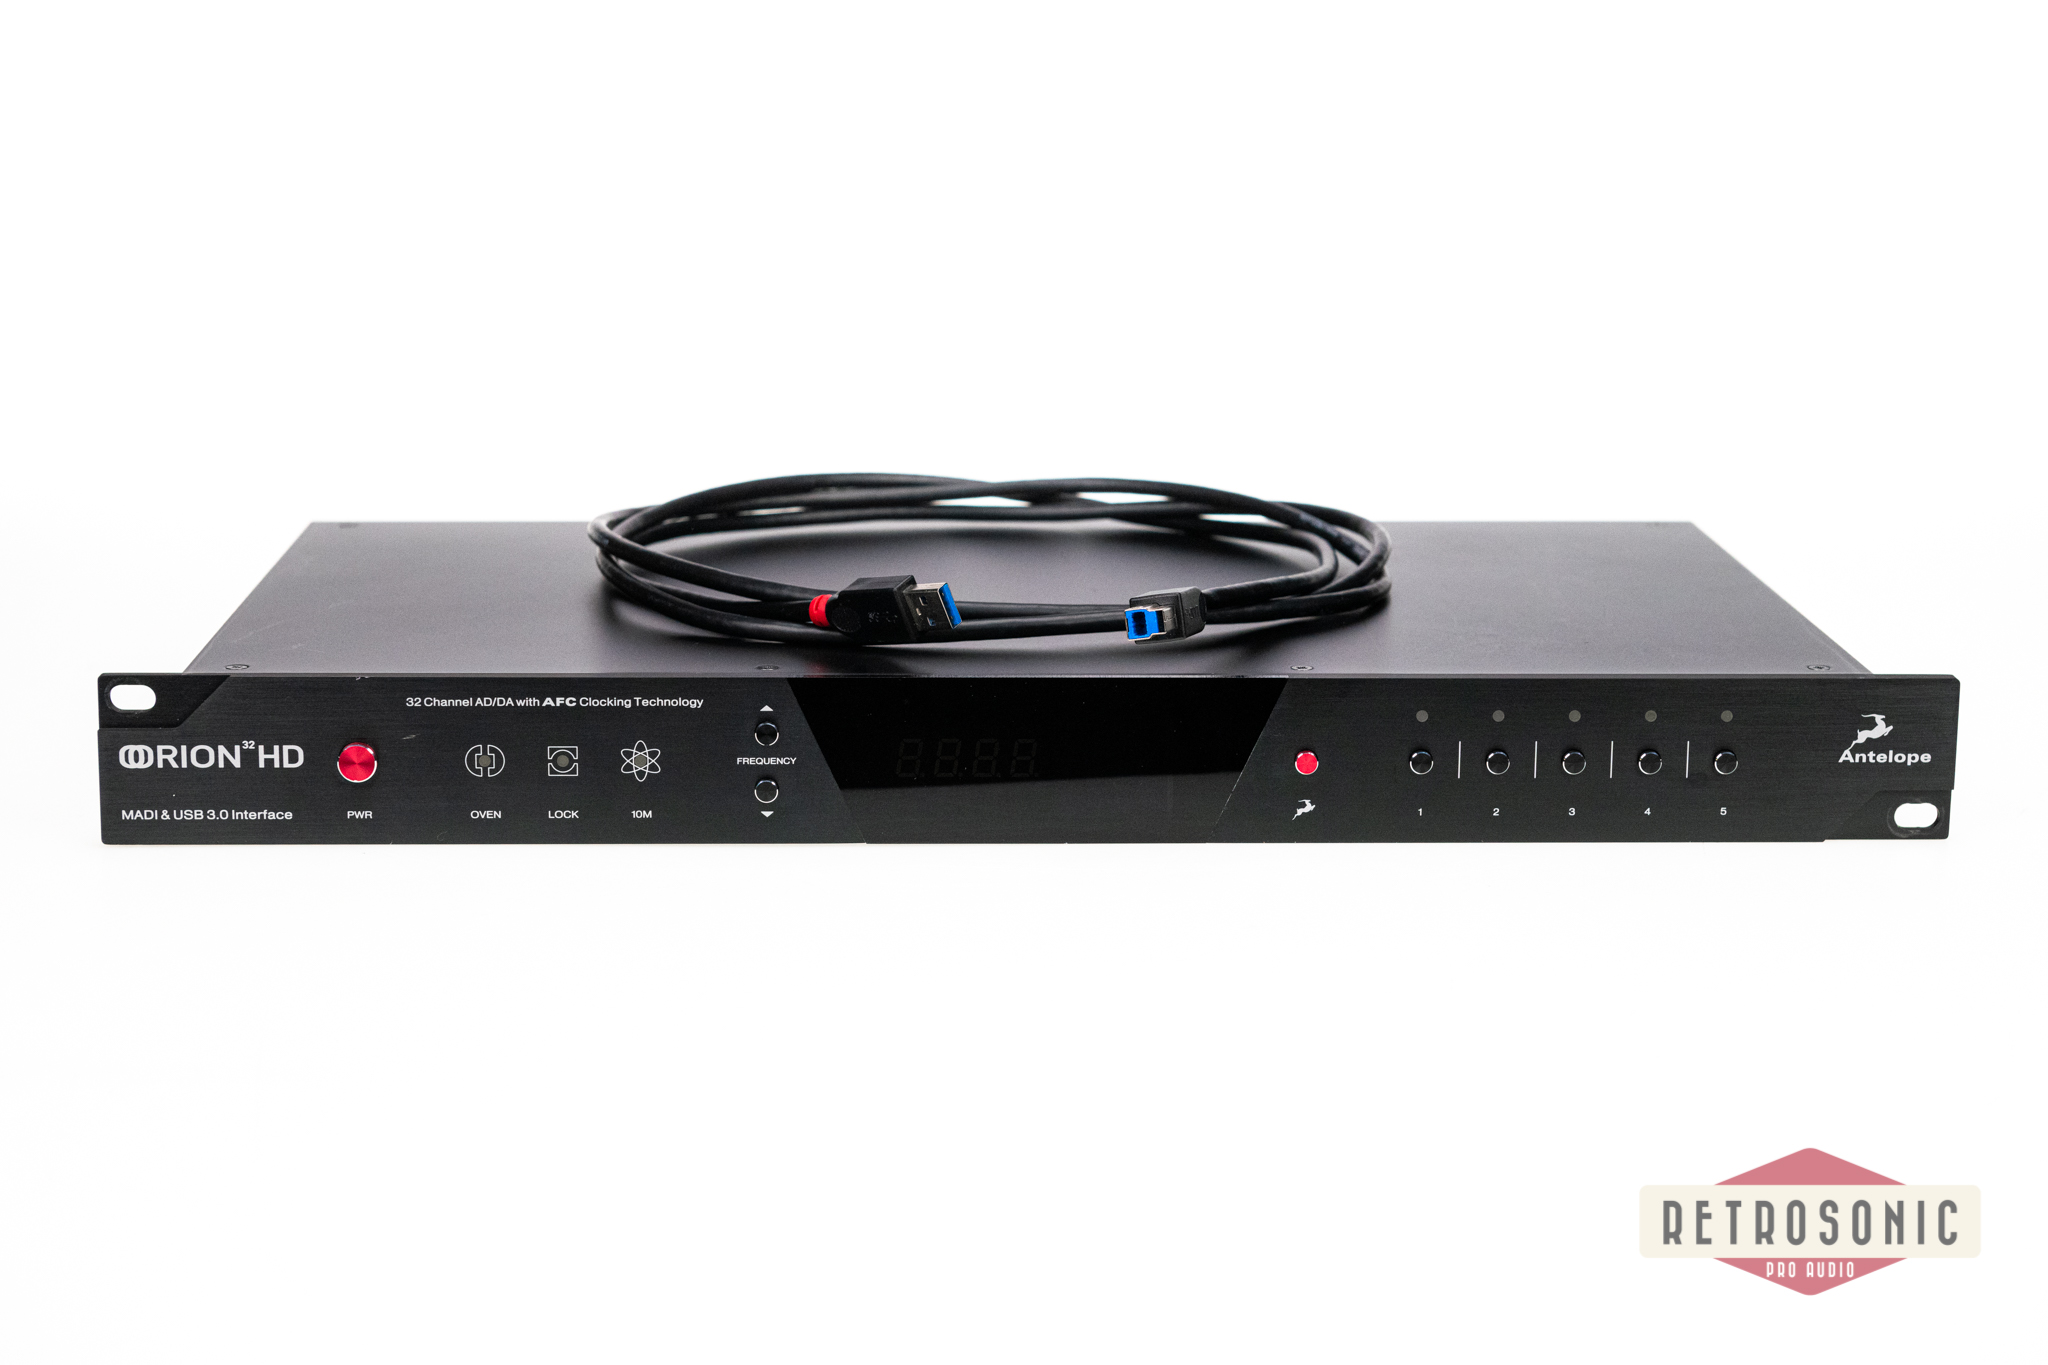 Antelope Audio Orion 32 HD Gen 3 USB 3.0 / Pro Tools HDX Audio Interface